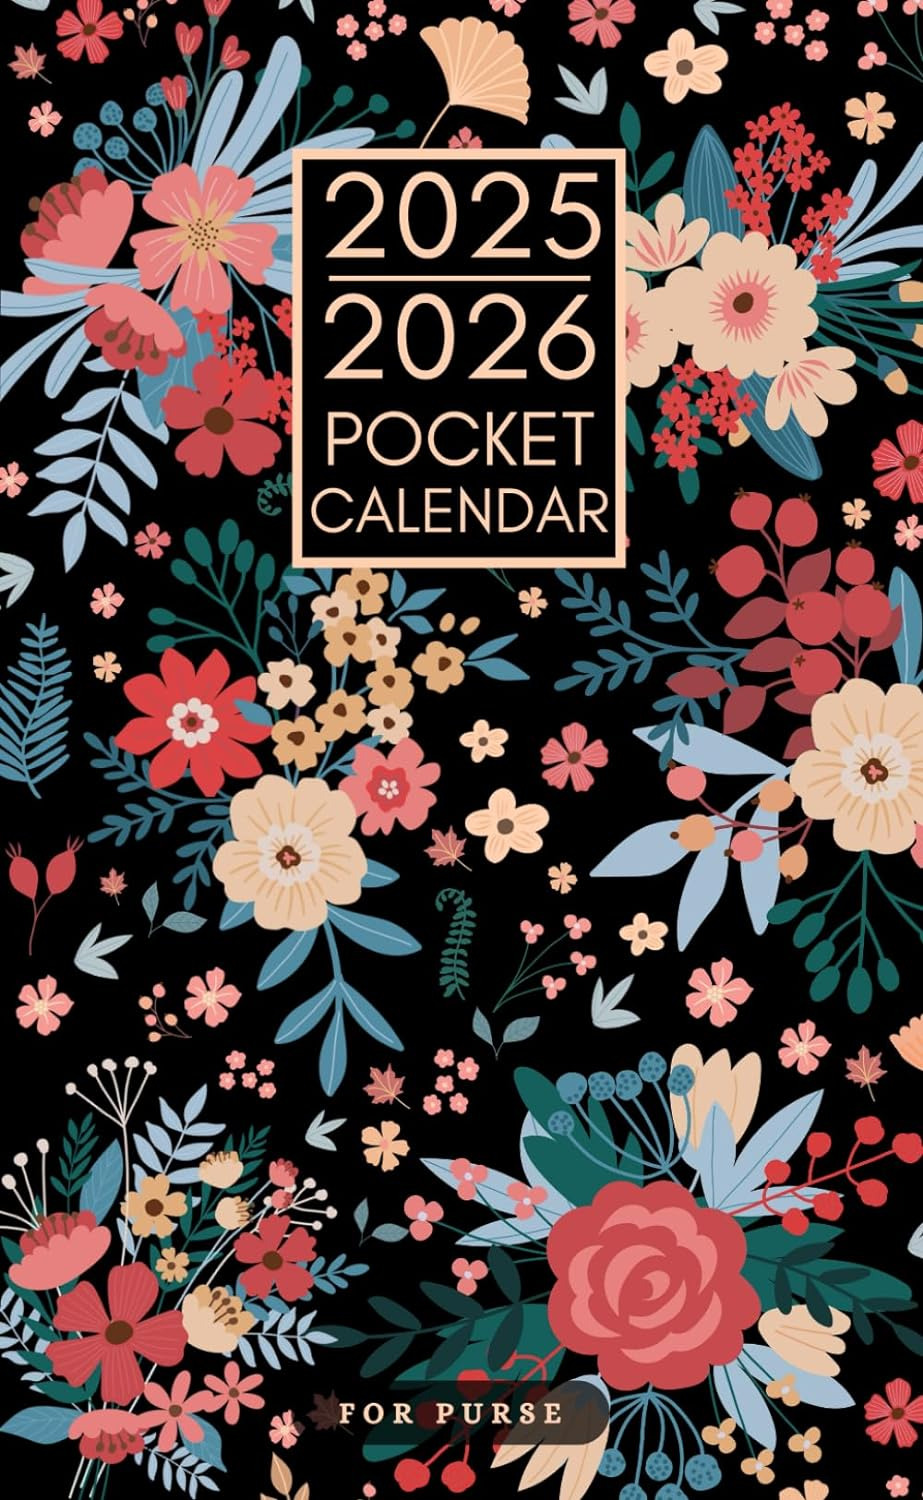 Pocket Calendar 2025-2026 for Purse: 2 Year Pocket Planner January 2025 - Decemb